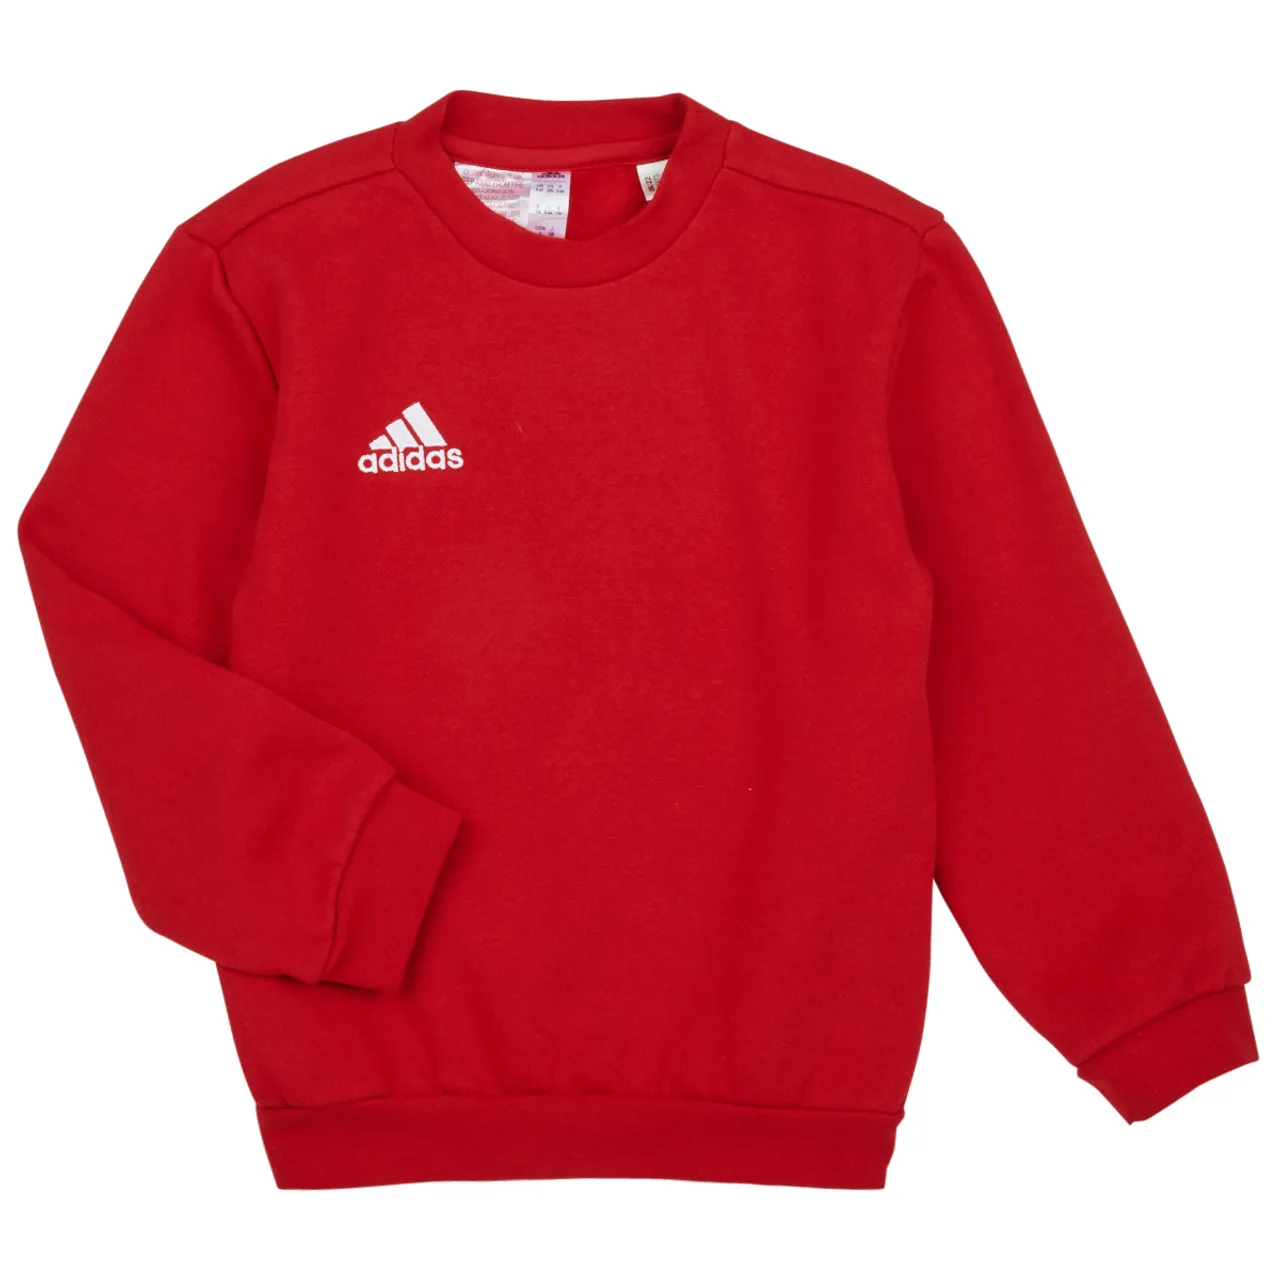 adidas  ENT22 SW TOPY  boys's Children's sweatshirt in Red